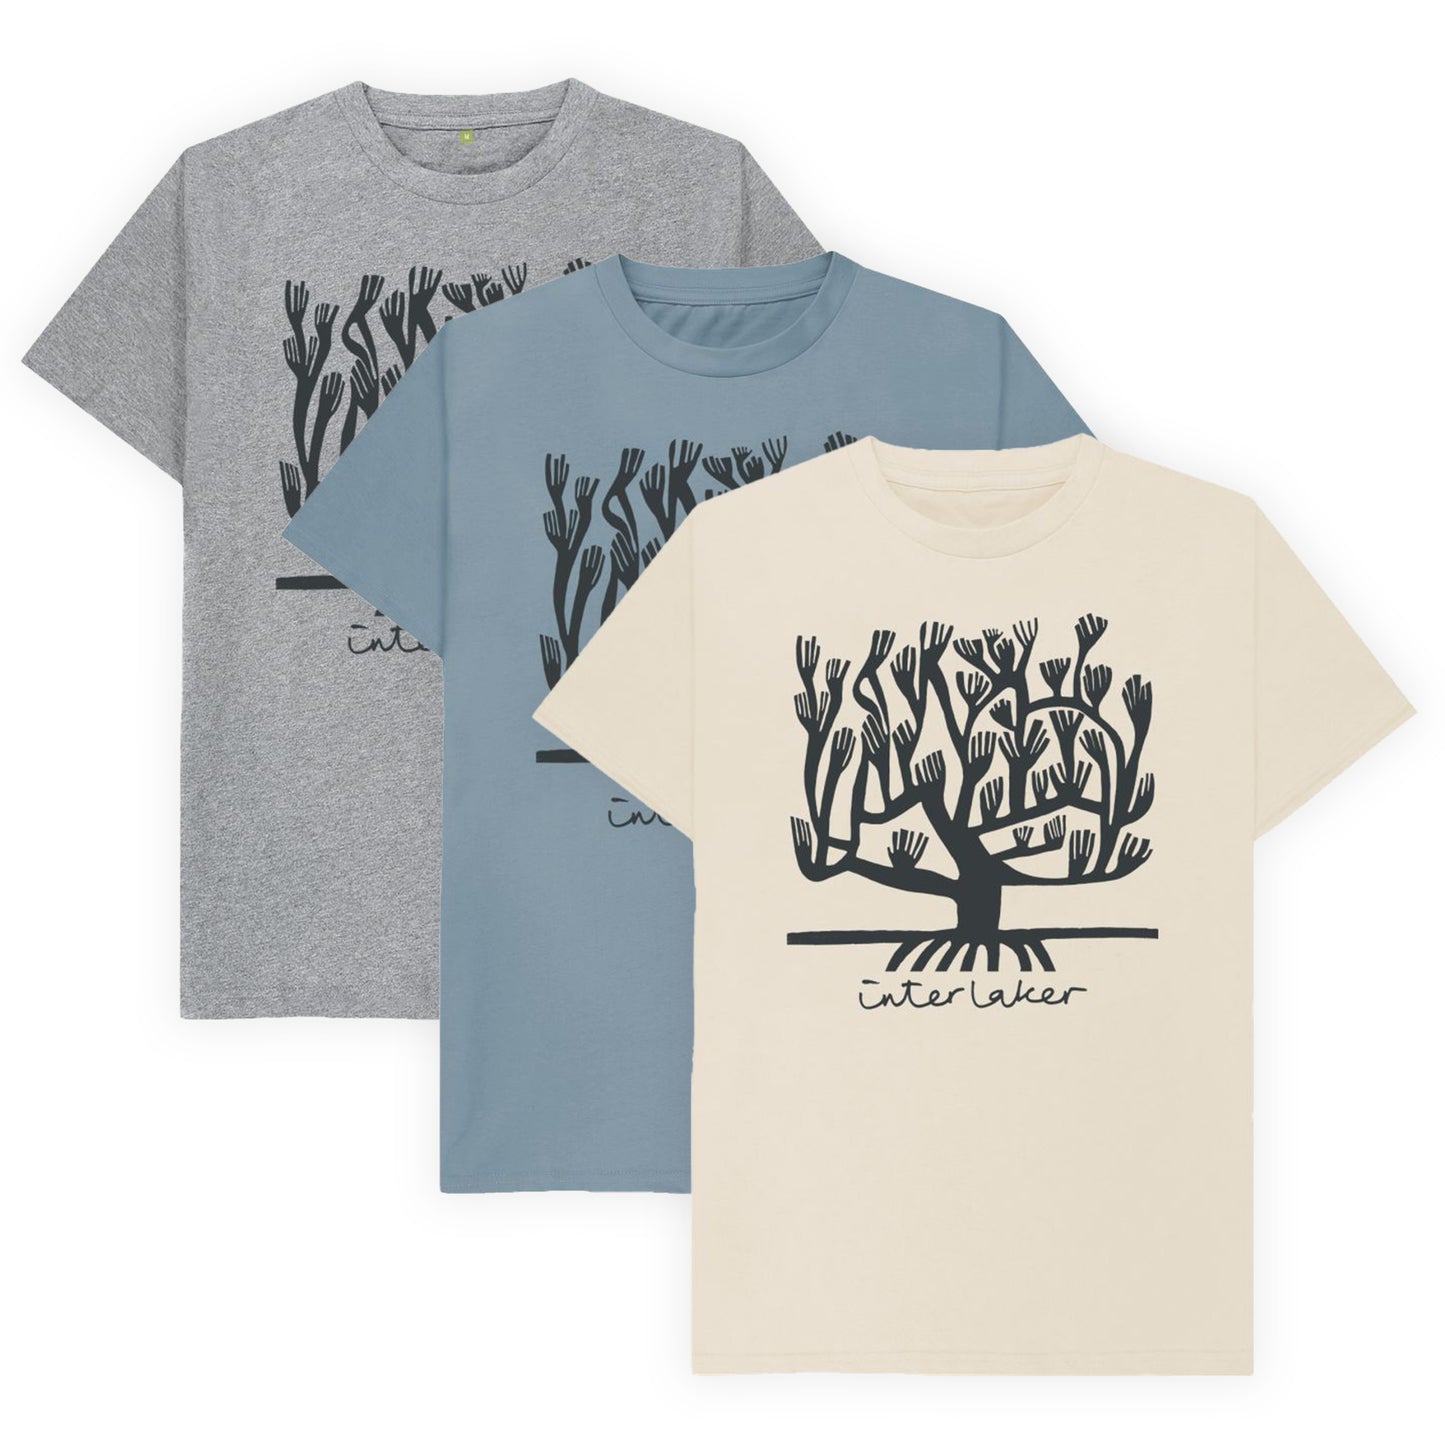 Interlaker - 'Roots' T-Shirt (Dark Print)